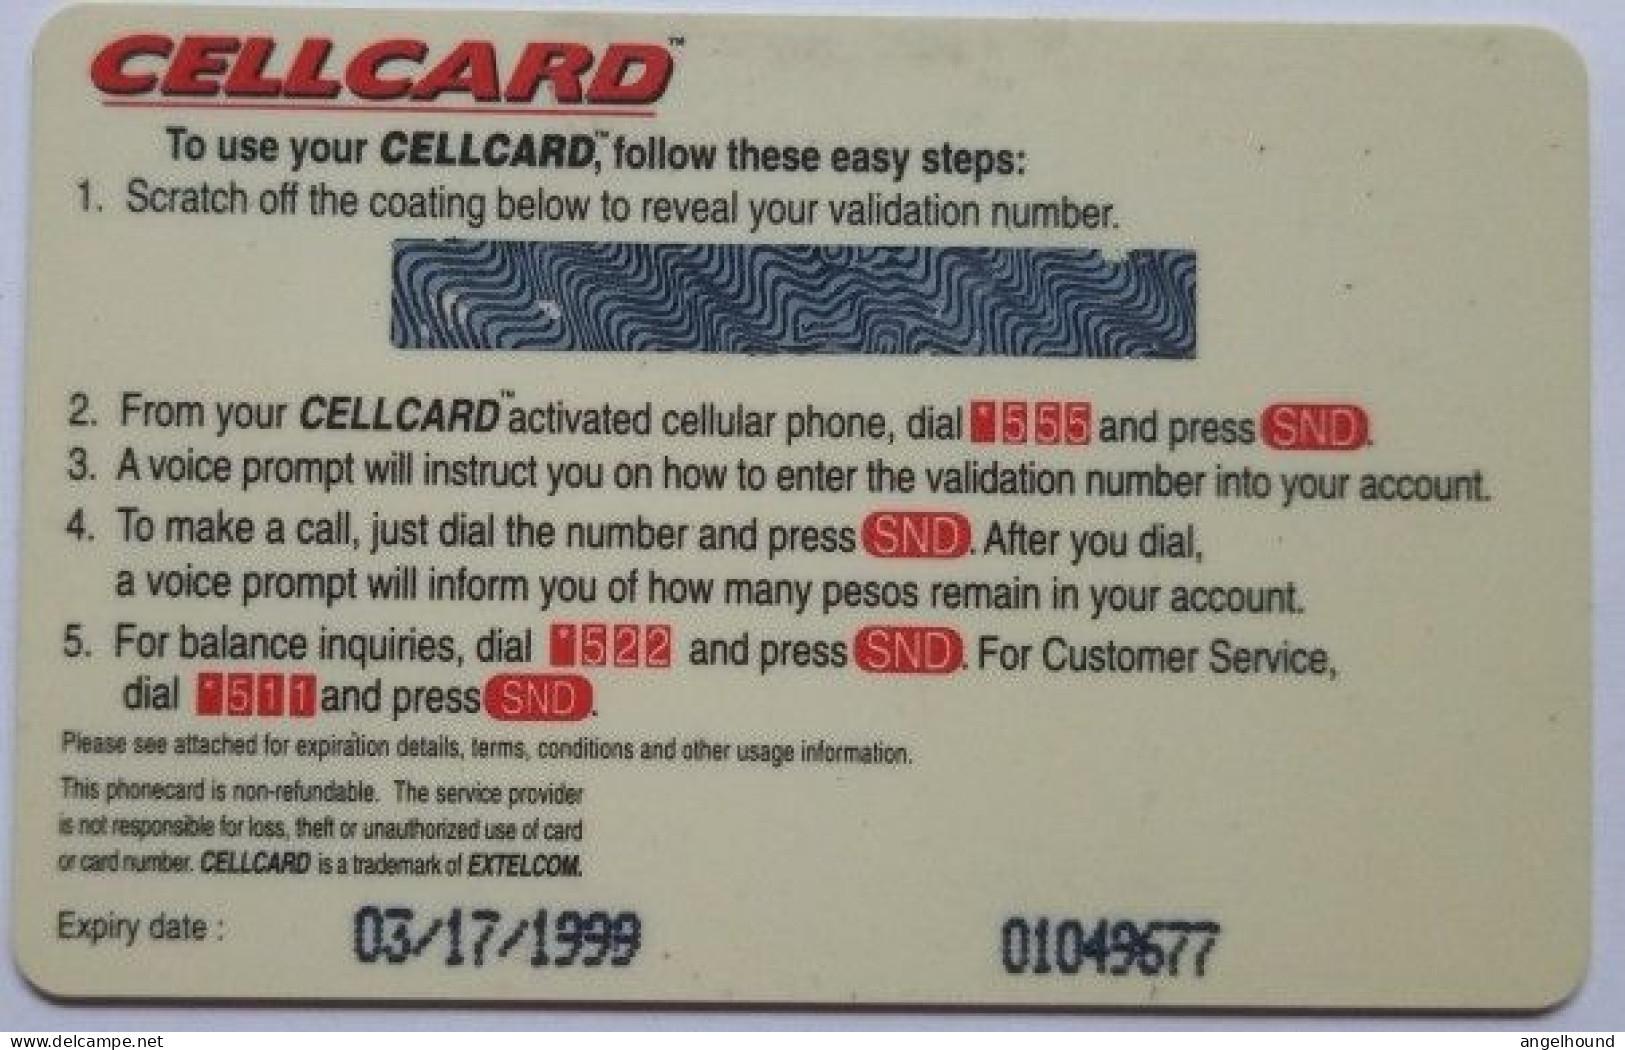 Philippines Extelcom Cellcard P500 MINT - Wow Wow Win - Filippijnen